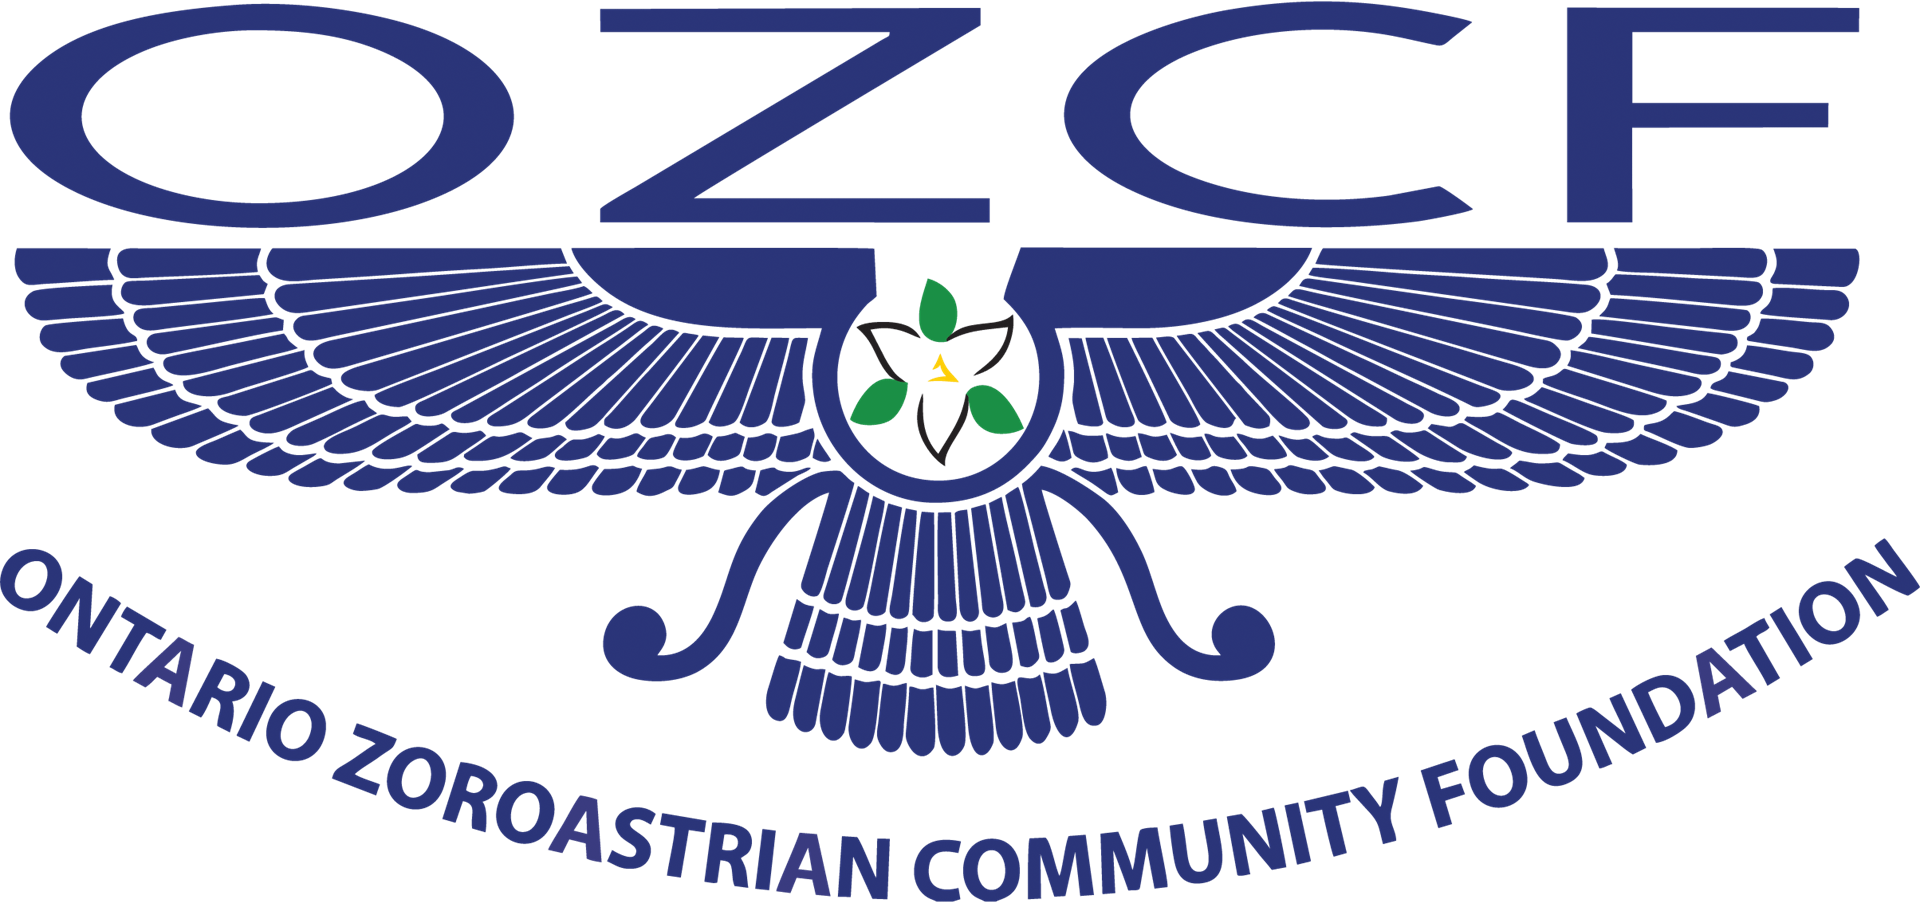 Zoroastrian Logo - Ontario Zoroastrian Community Foundation